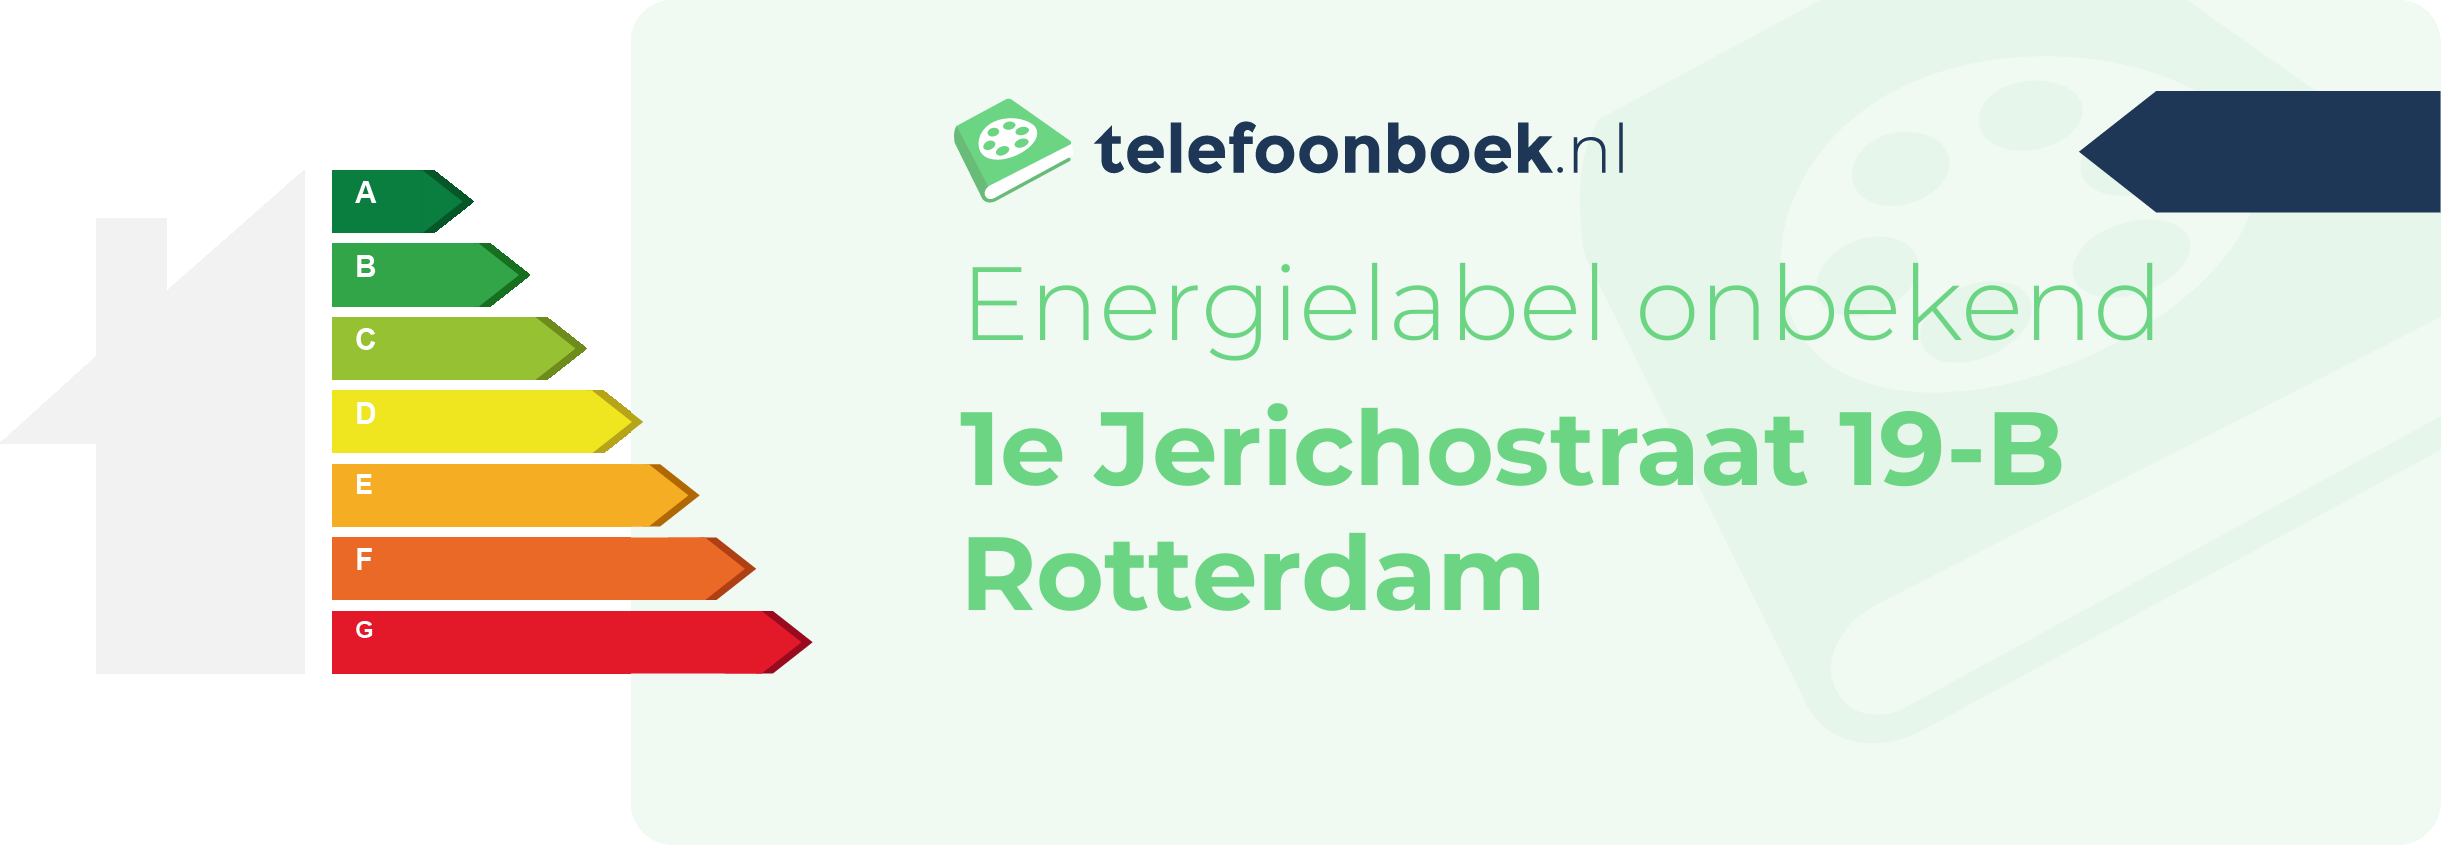 Energielabel 1e Jerichostraat 19-B Rotterdam